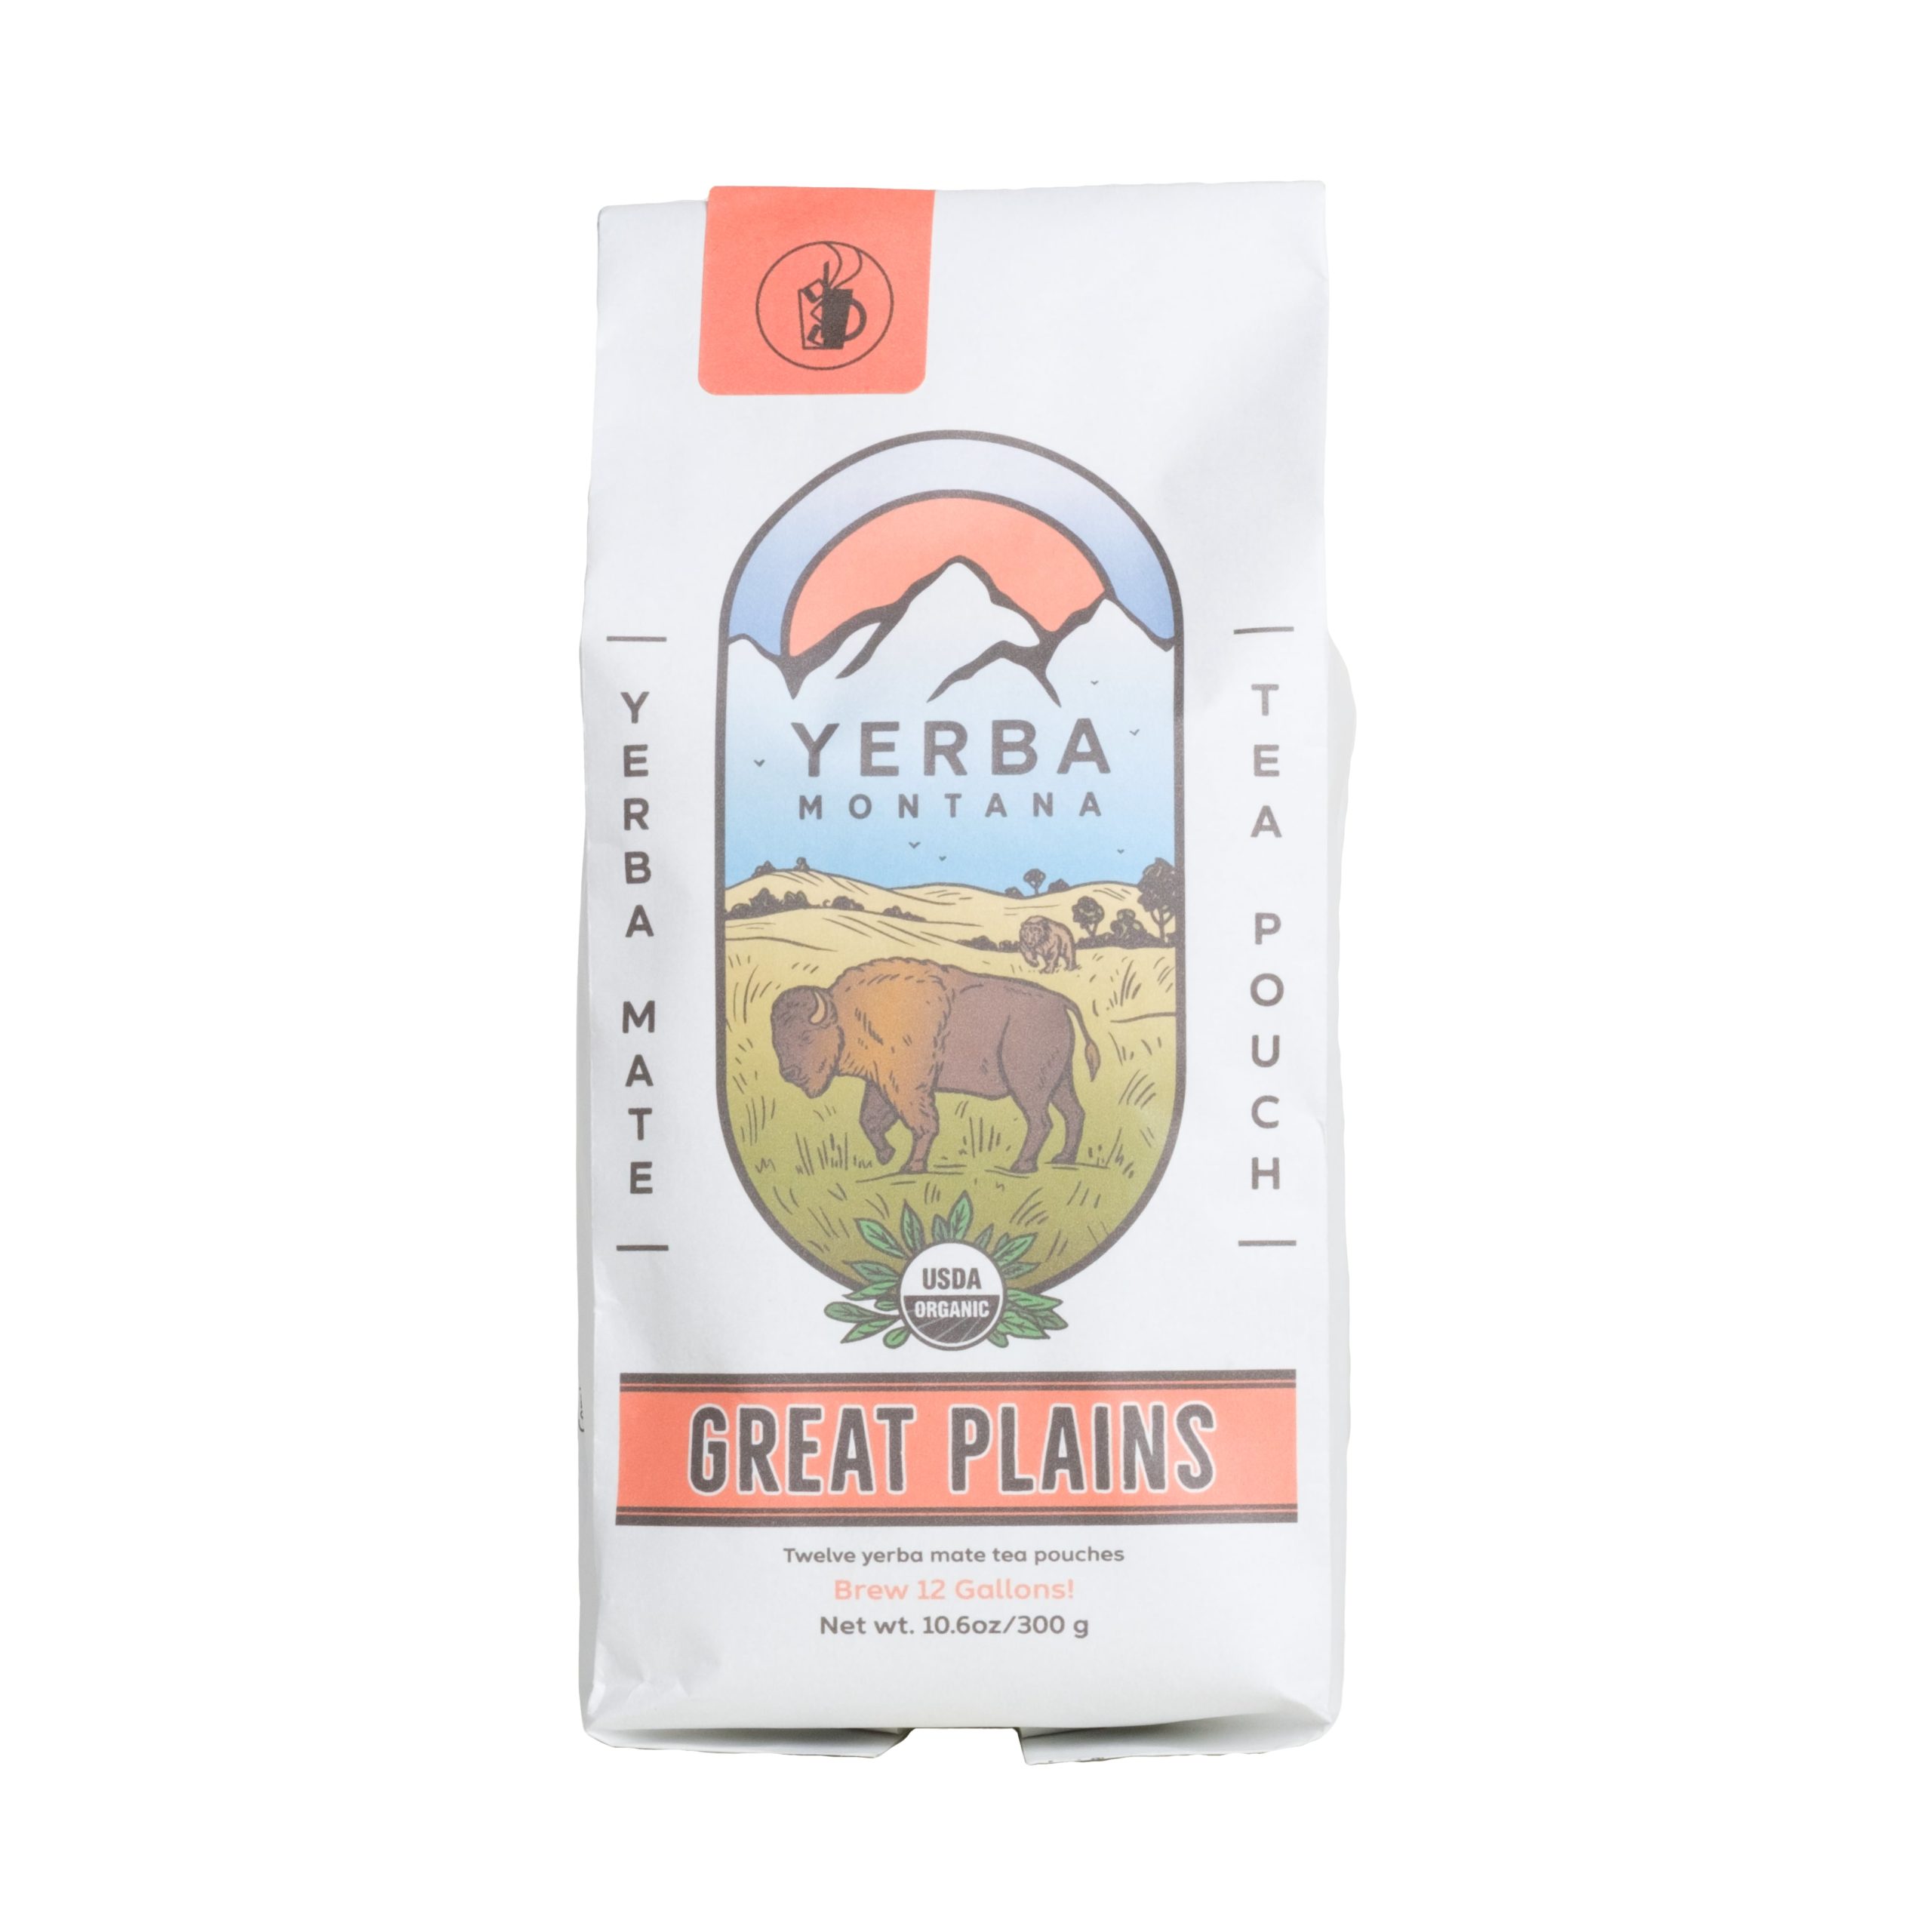 Great Plains Yerba Mate Tea Bags